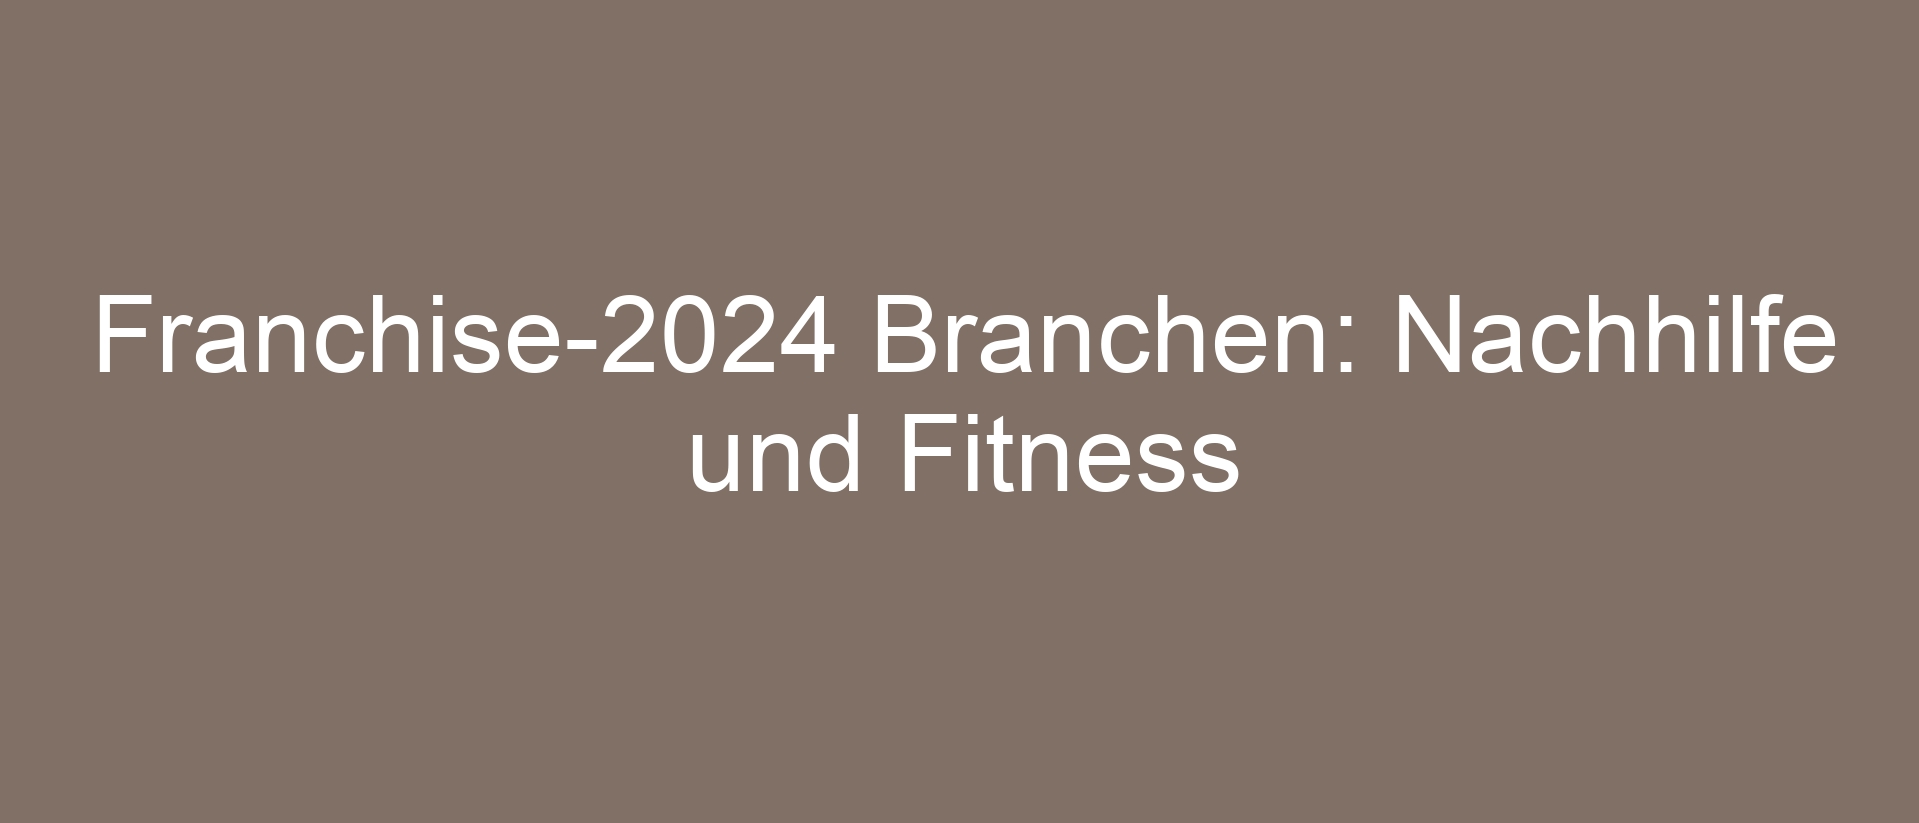 Franchise-2024 Branchen: Nachhilfe und Fitness